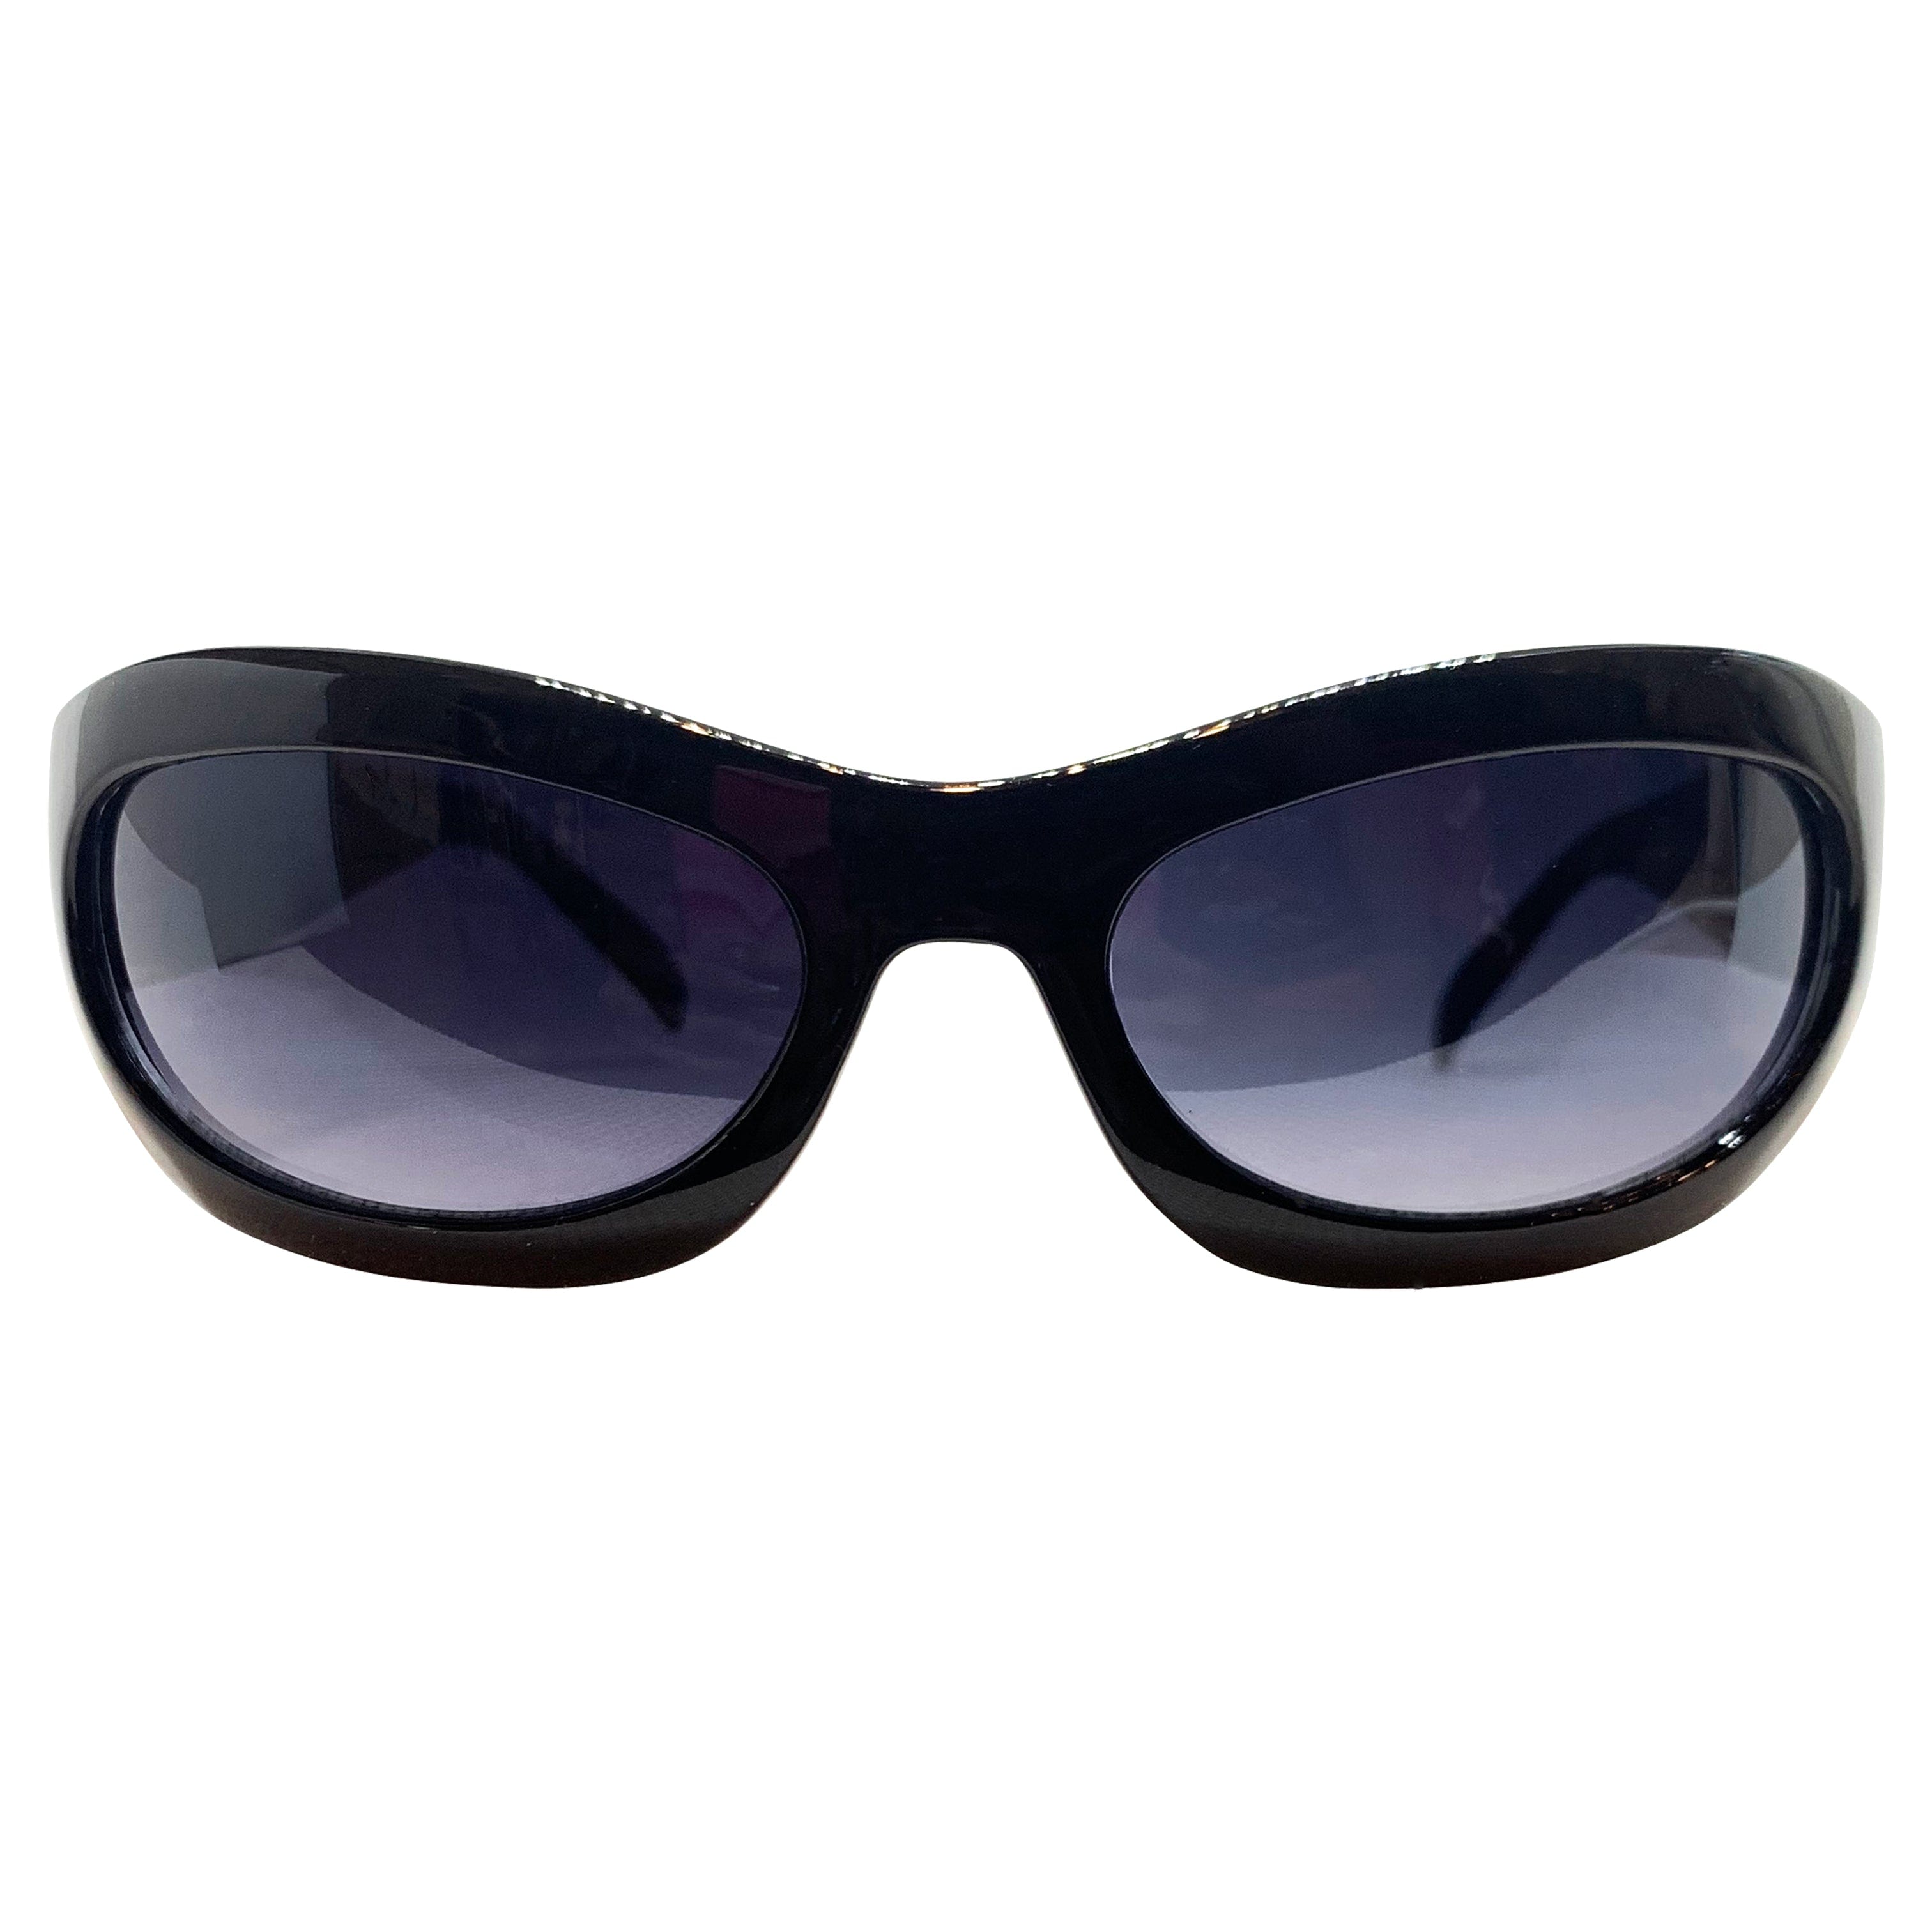 BERRYLICIOUS Super Dark Round Sunglasses